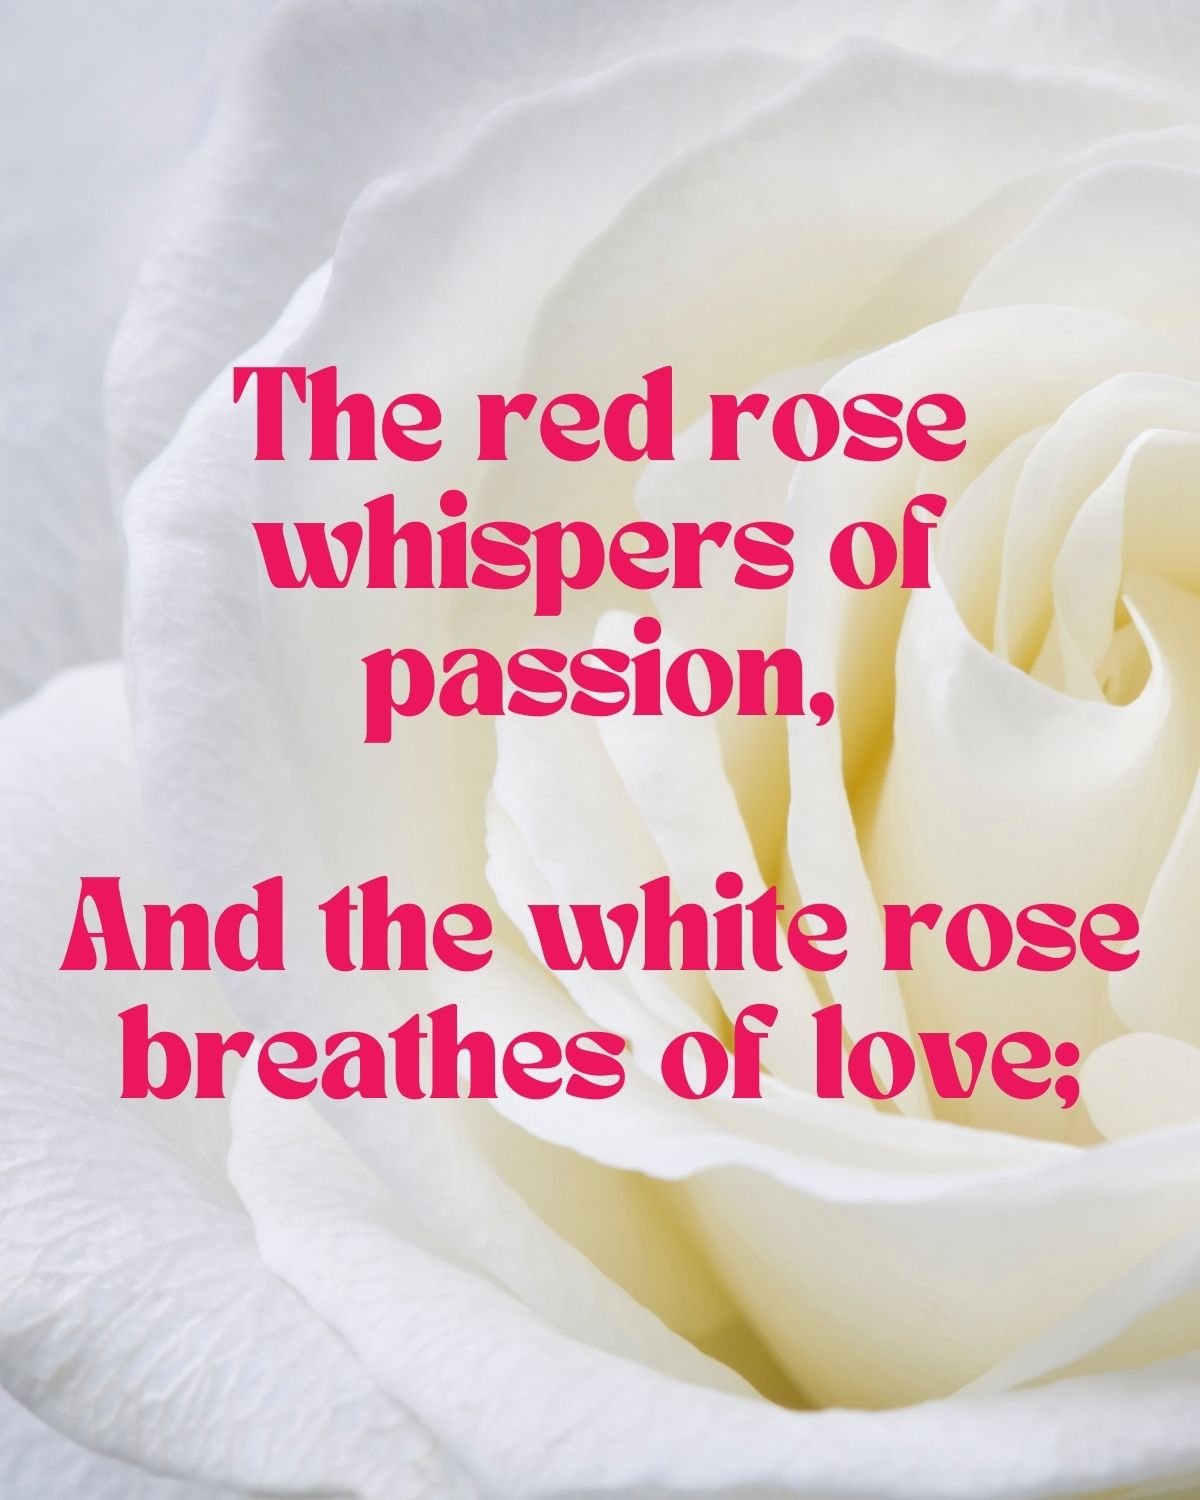 A white rose closeup